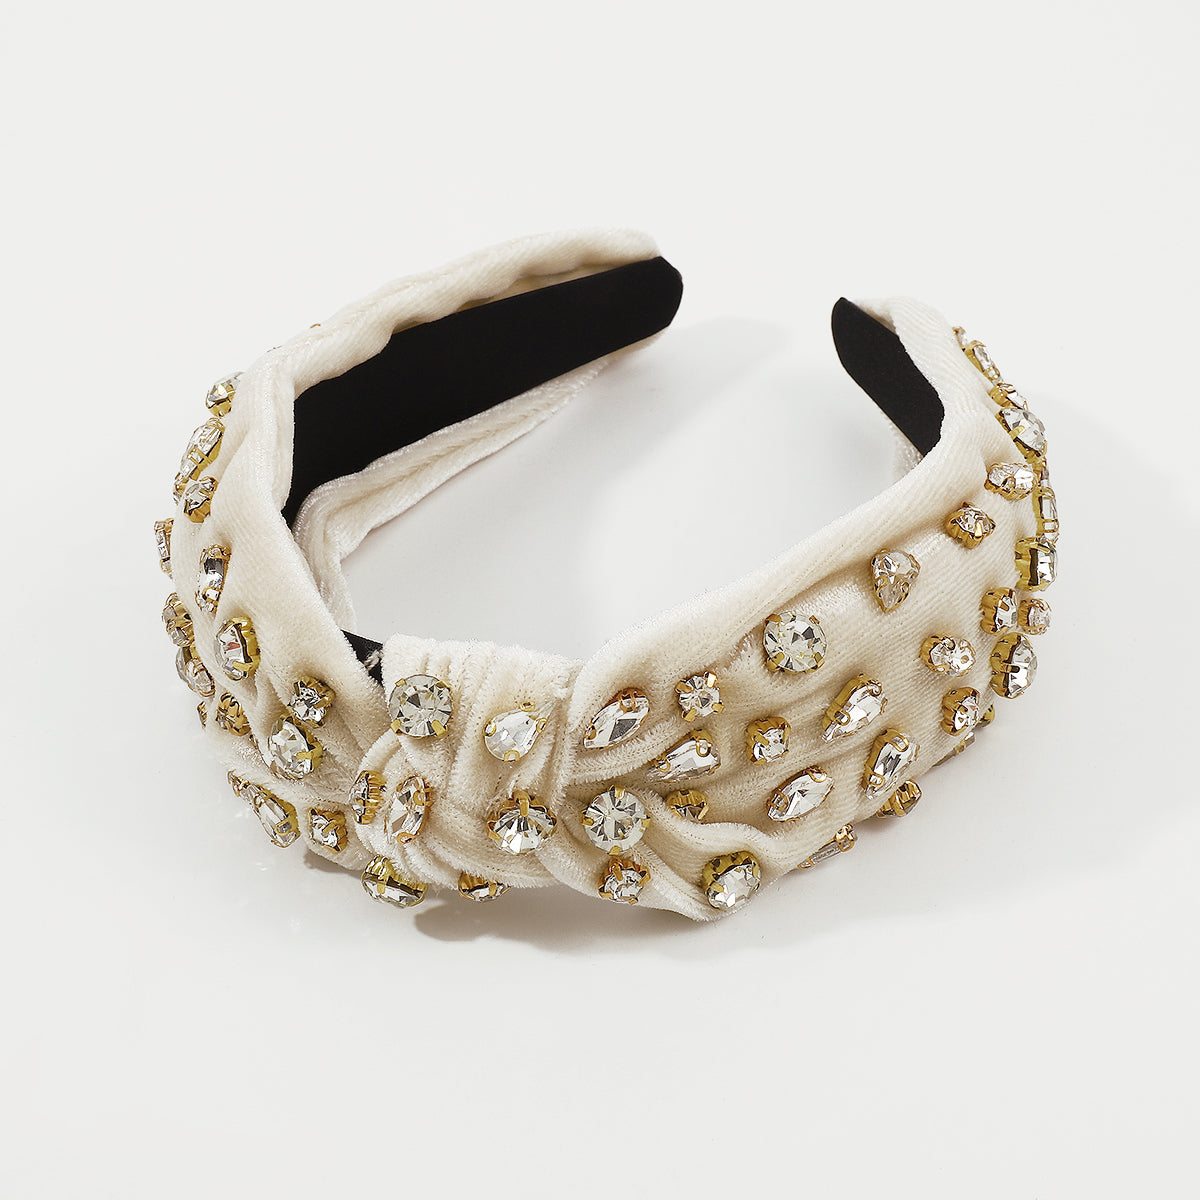 Corduroy Large Crystal Top Knot Headband medyjewelry